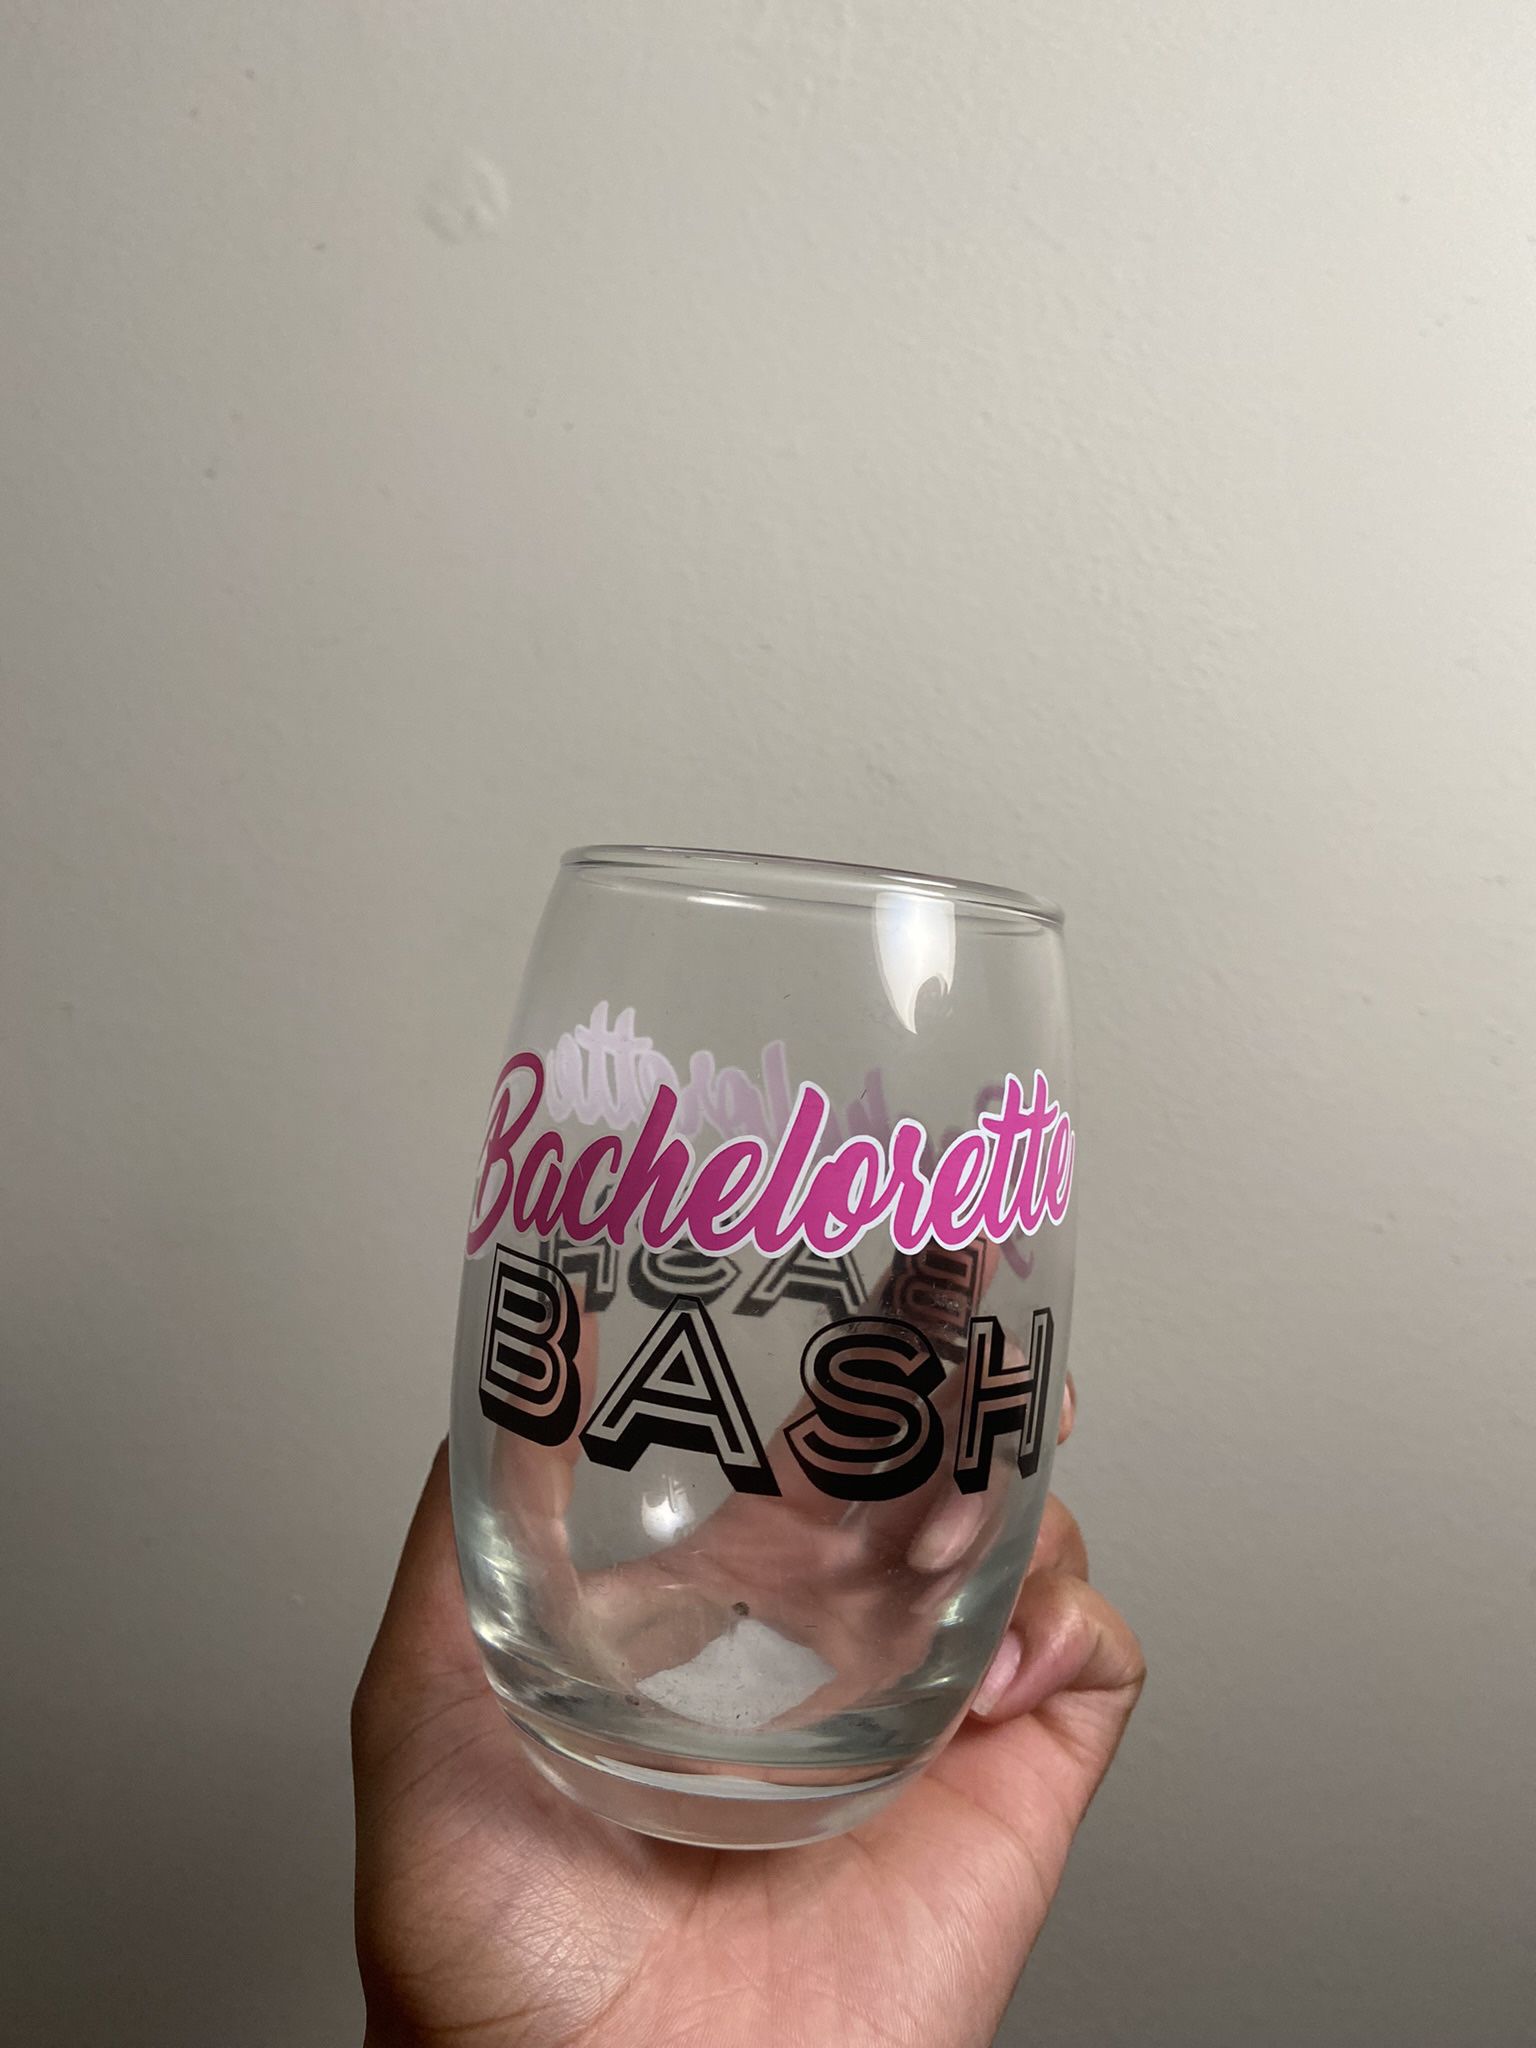 ‘Bachelorette Bash’ drink glasses